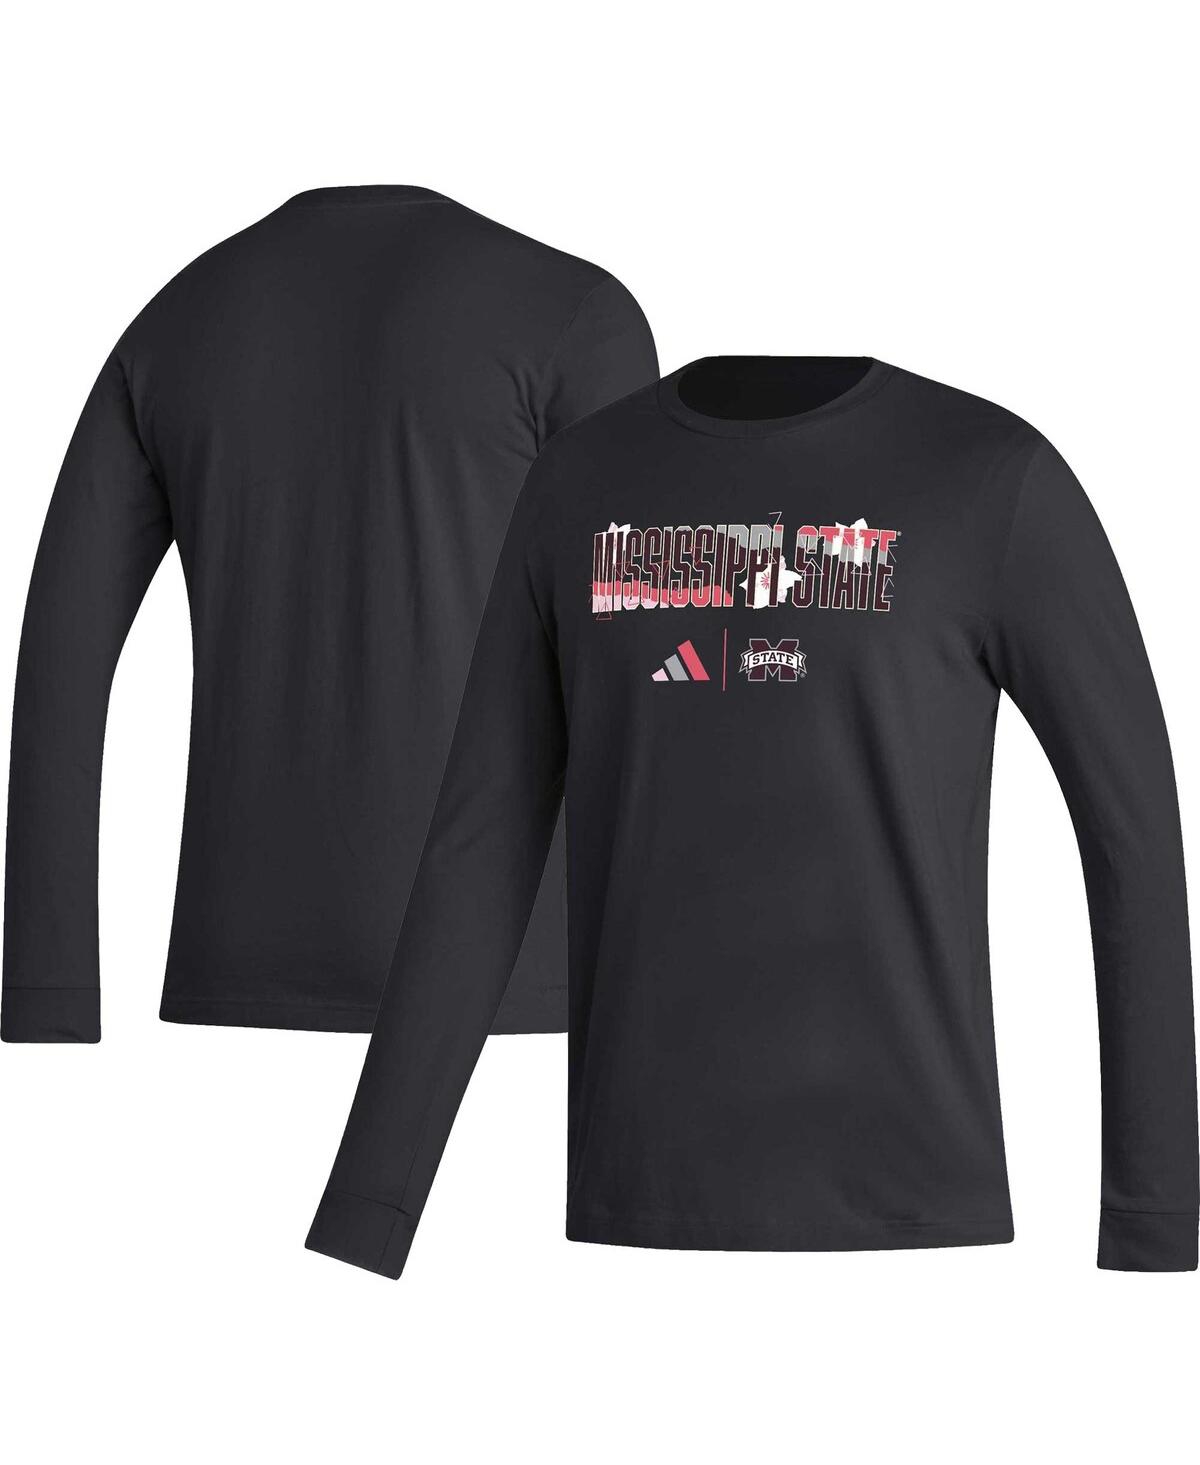 Shop Adidas Originals Men's Adidas Black Mississippi State Bulldogs Honoring Black Excellence Long Sleeve T-shirt